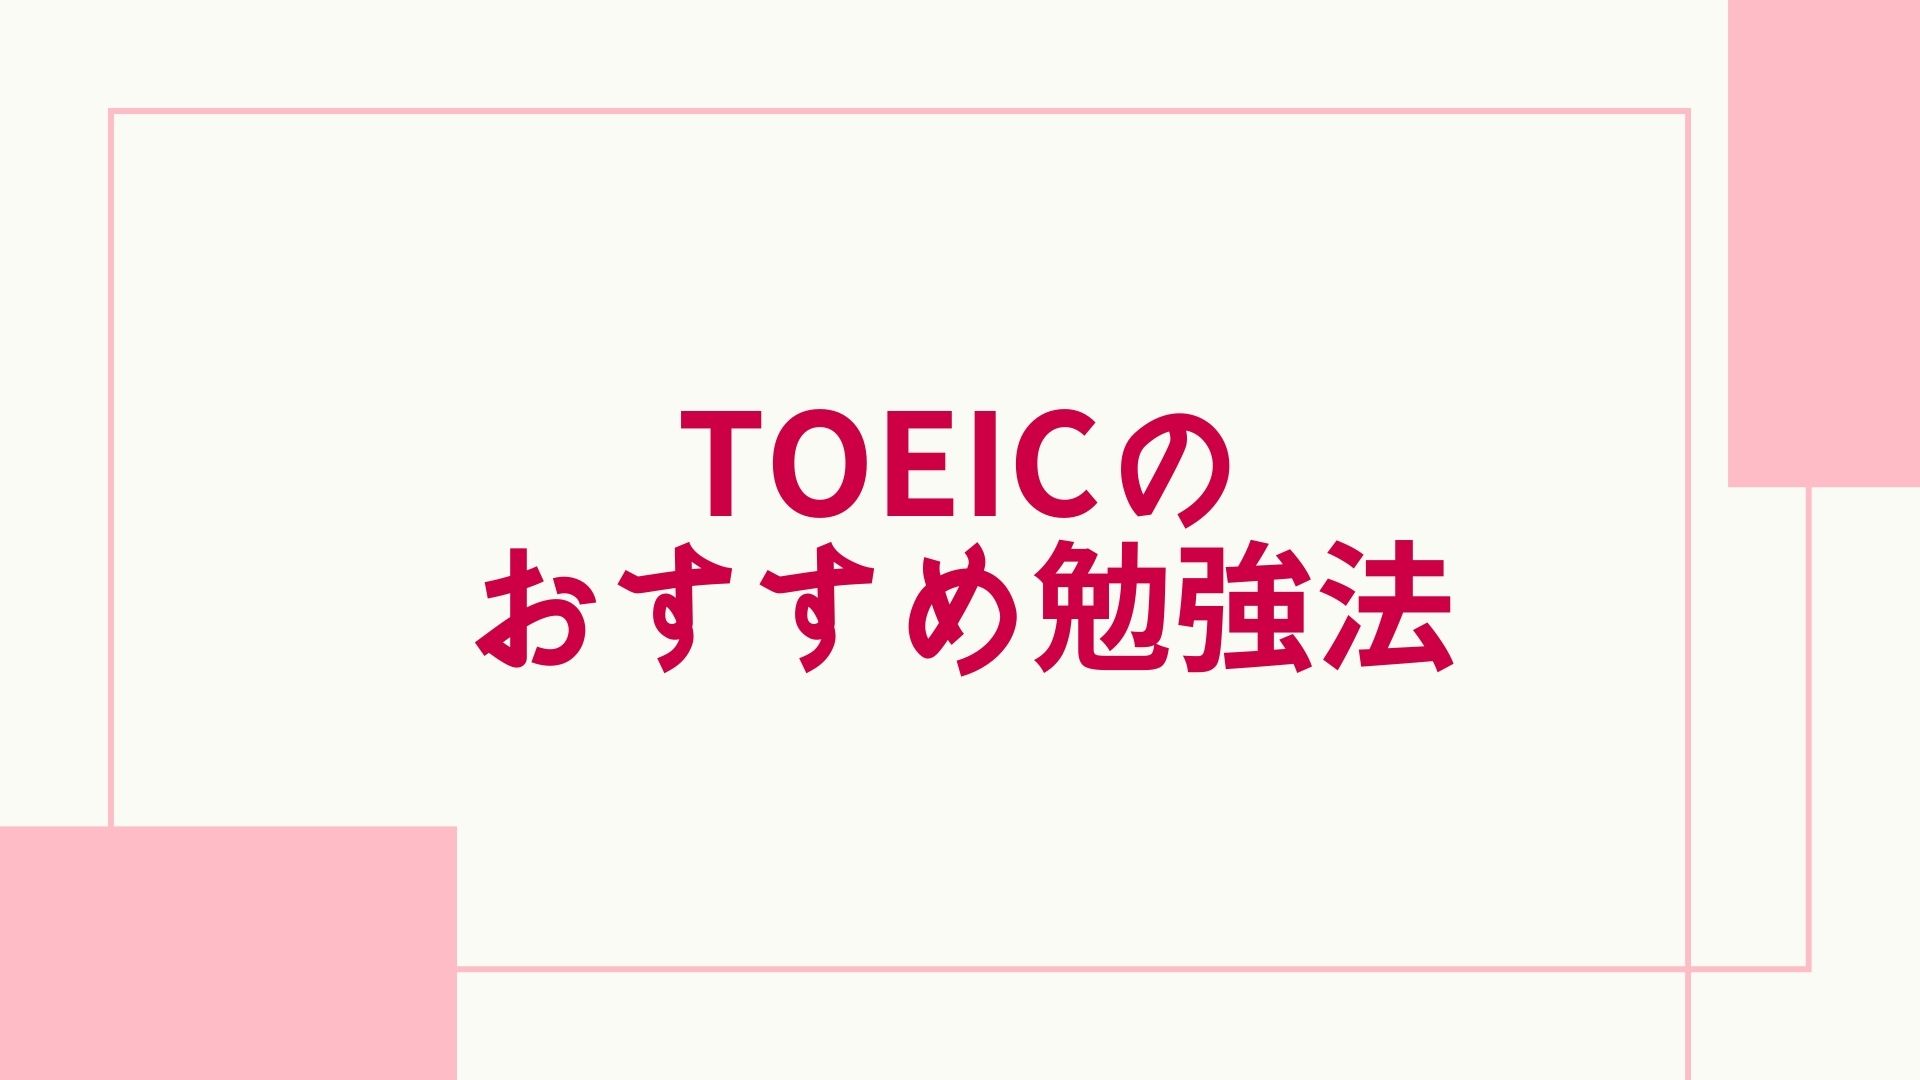 Toeicの初心者の勉強法とは まずやること おすすめの参考書やアプリも紹介 グッドスクール 資格取得情報比較